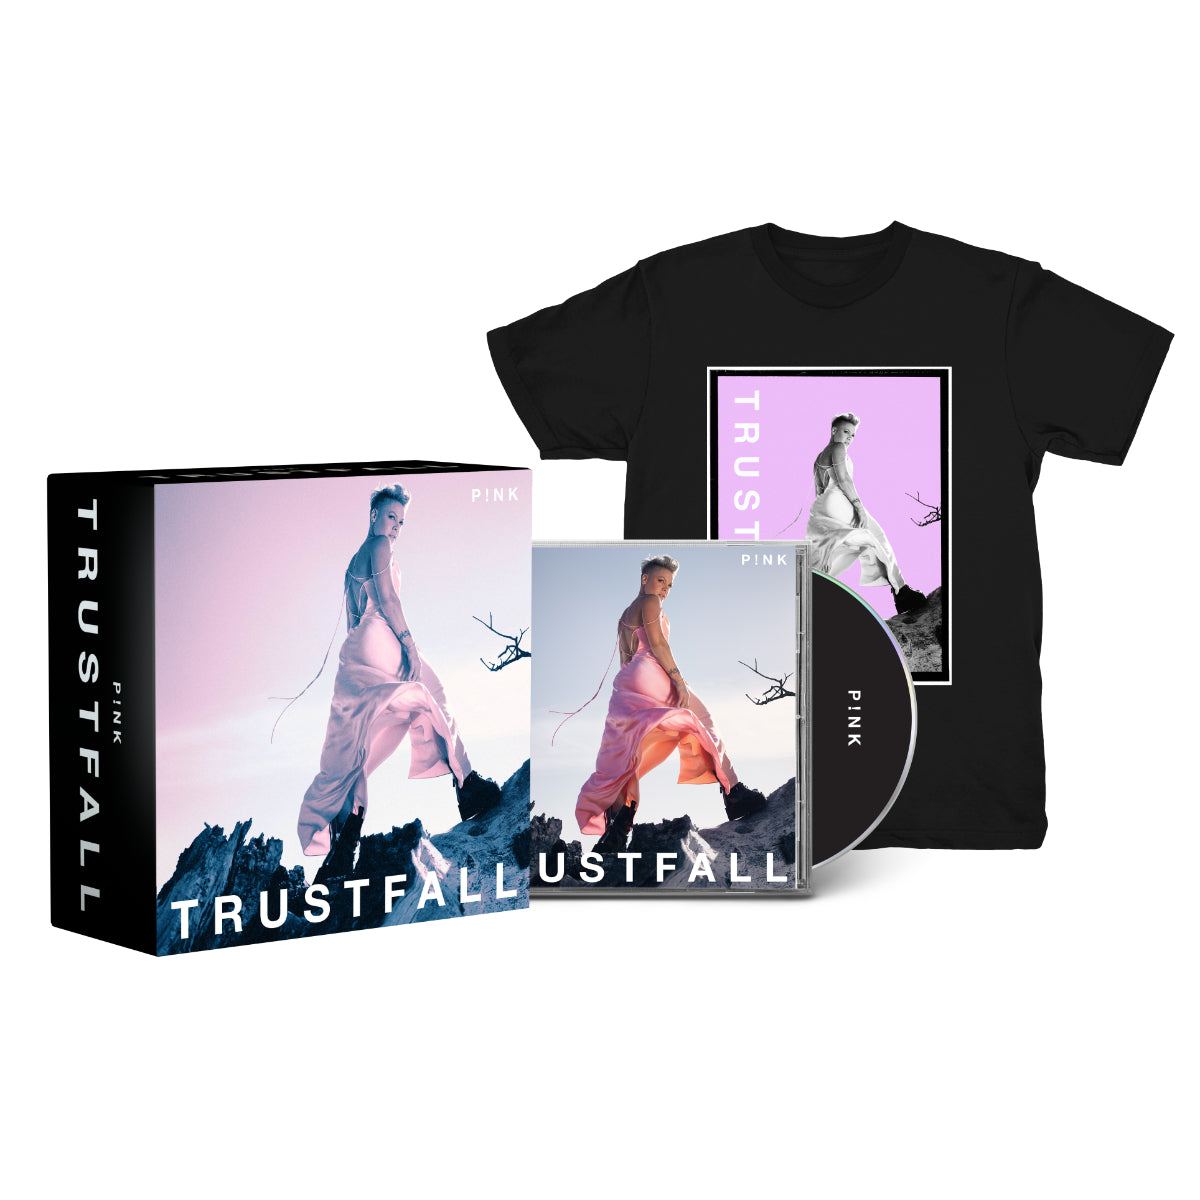 TRUSTFALL Limited Edition CD/T-Shirt Box Set